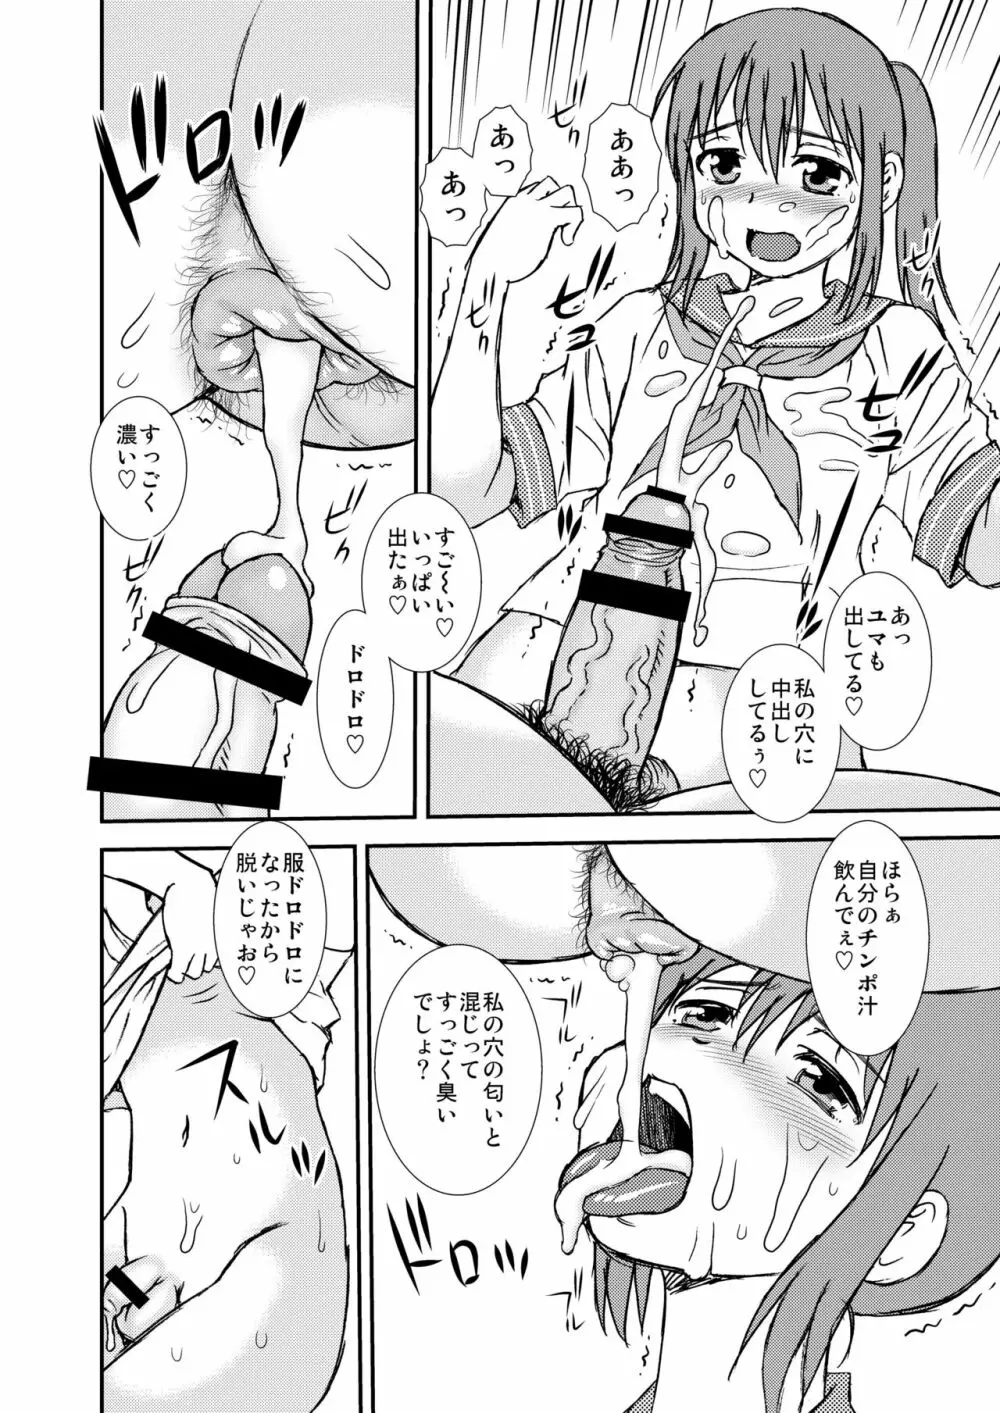 Manko男とChinpo女 - page31